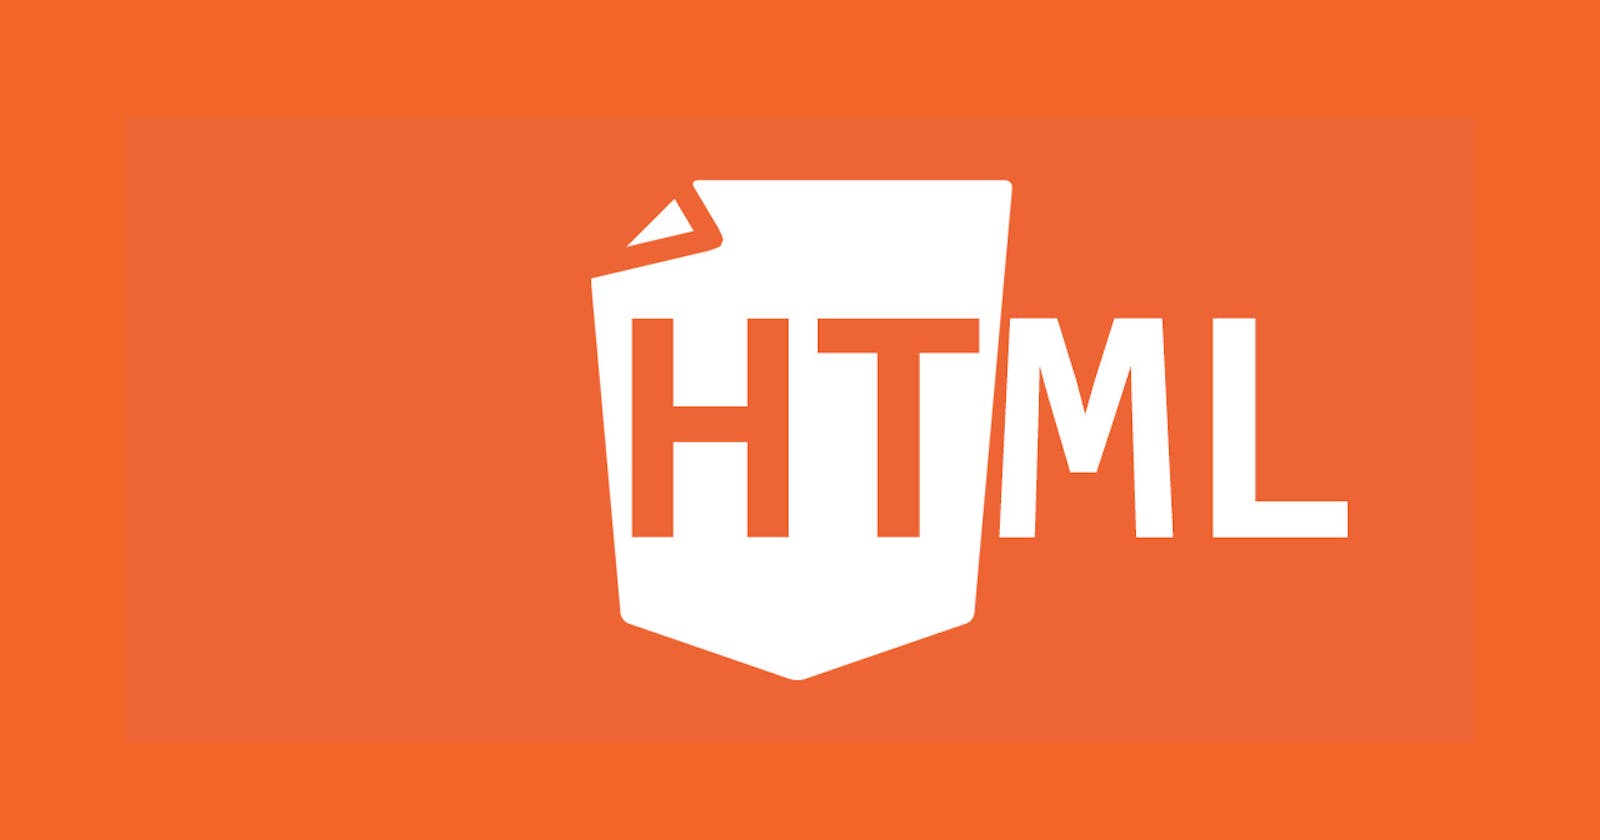 HTML | Useful HTML Tricks